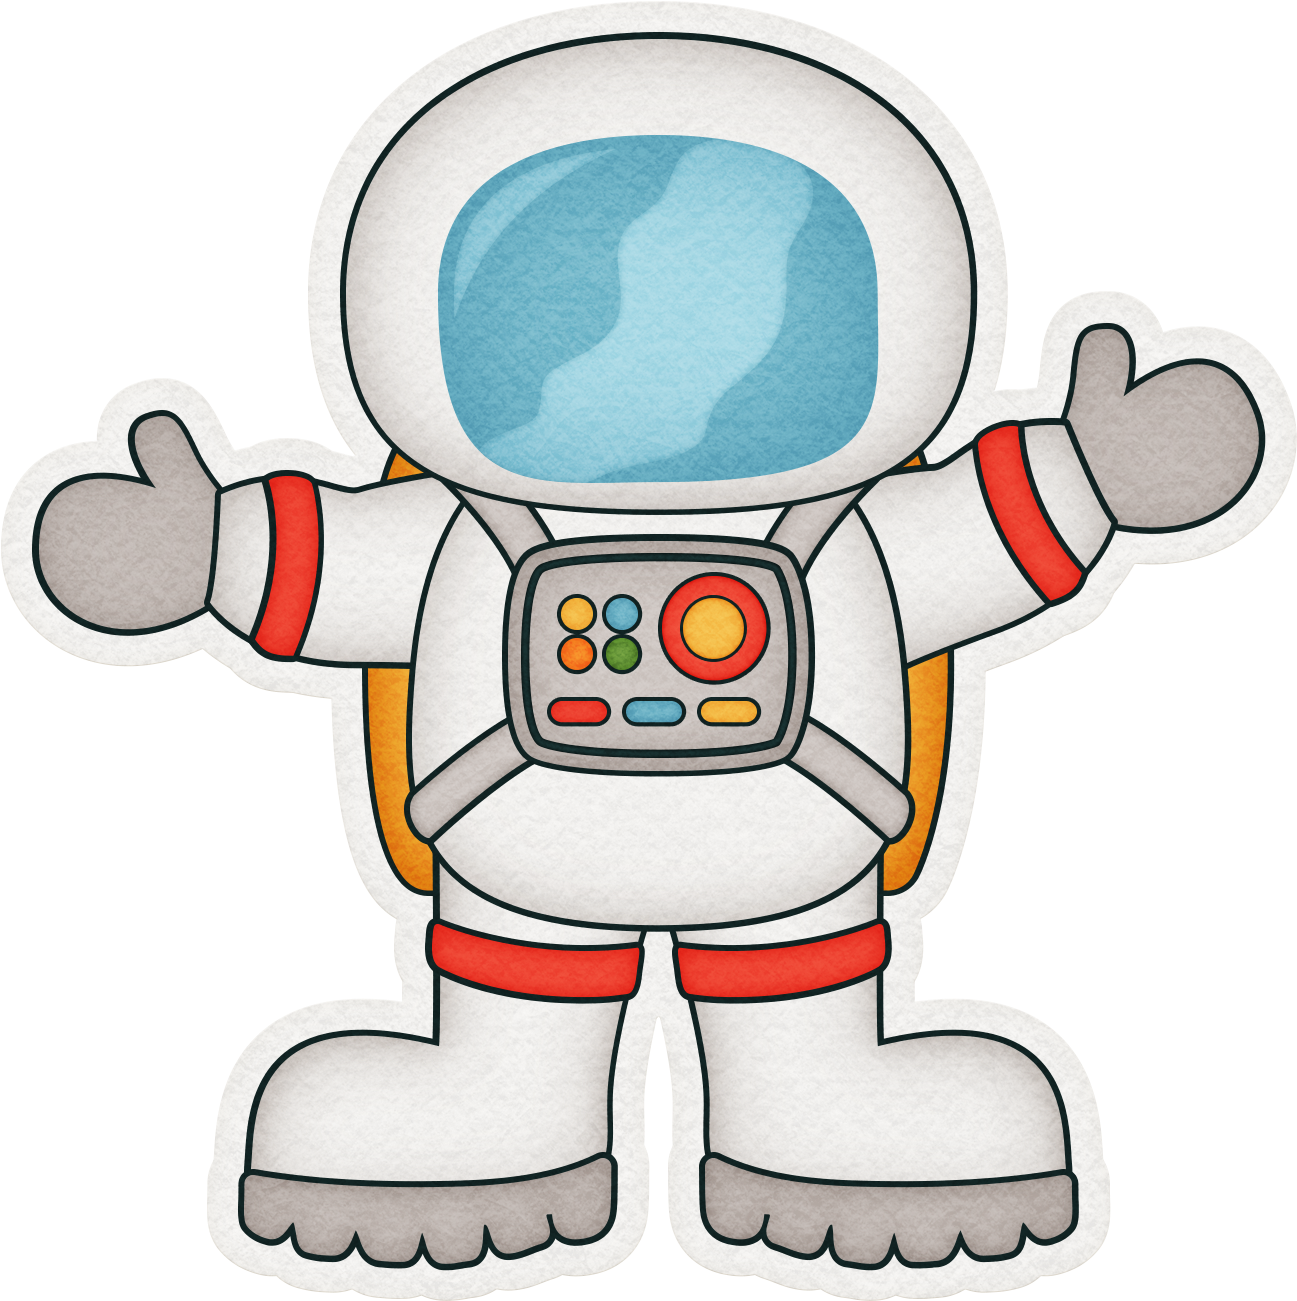 Astronaut Cartoon Outer Space Clip Art - Astronaut Cartoon Outer Space Clip Art (1306x1310)